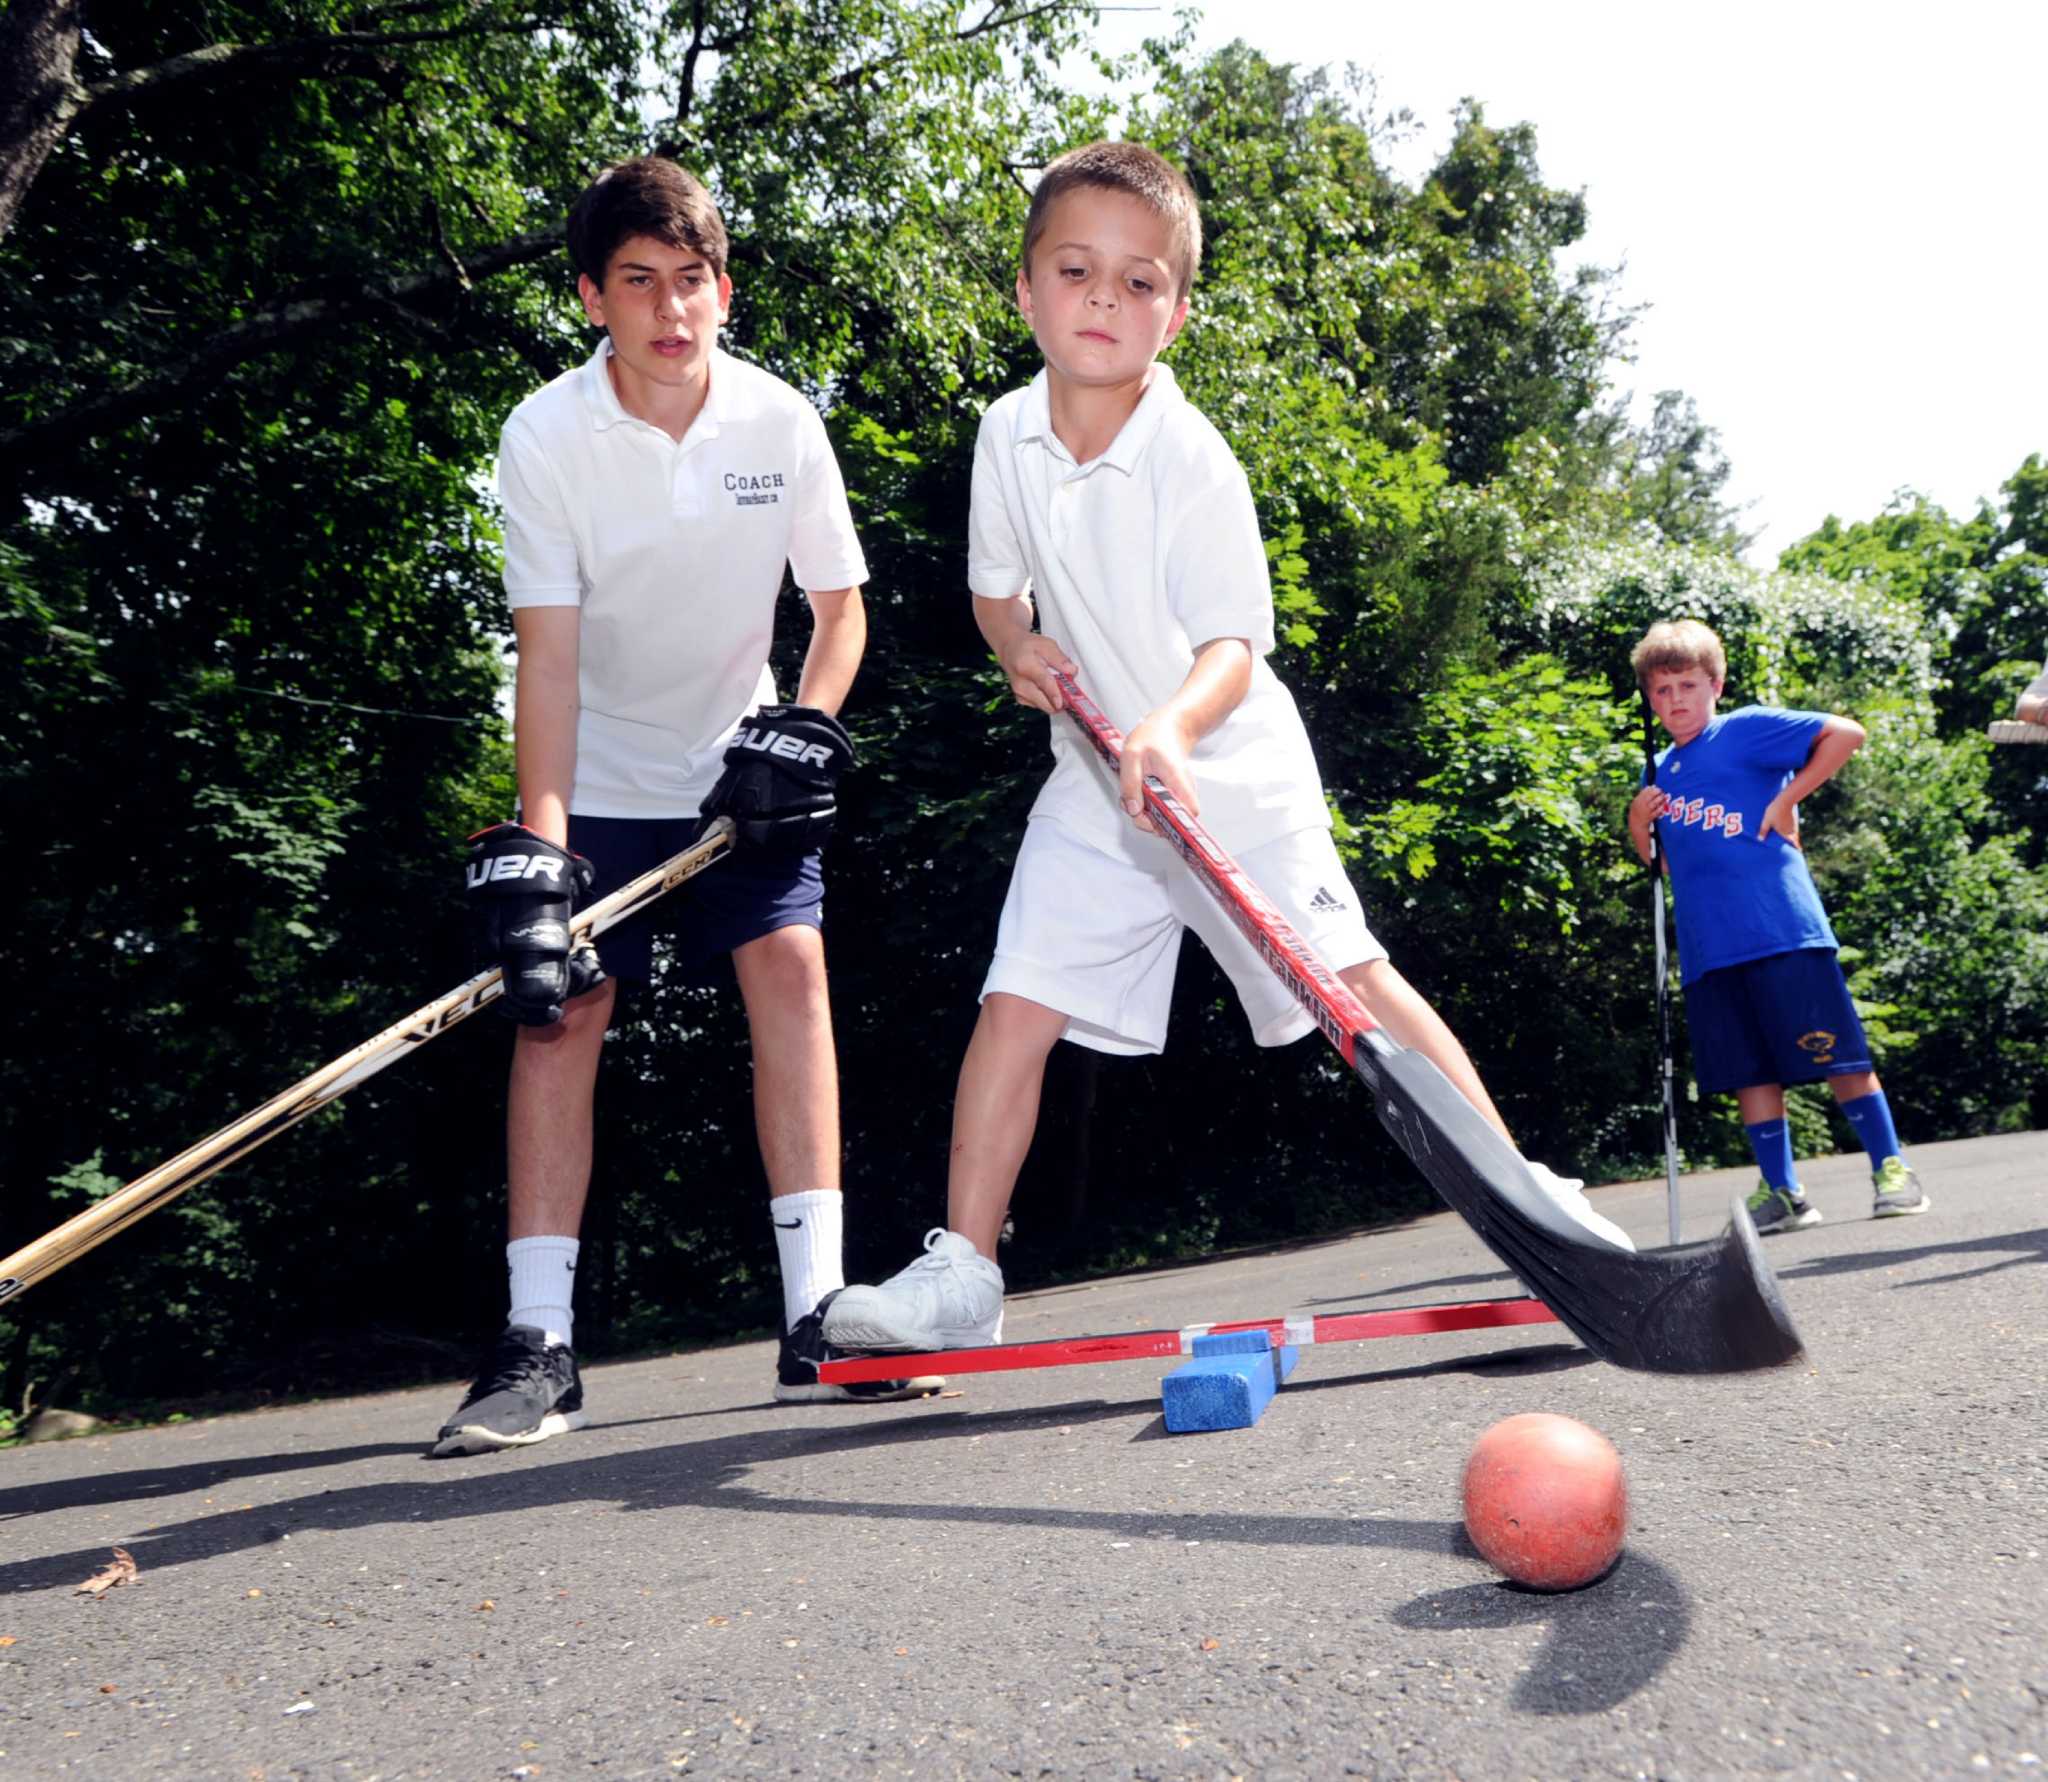 Greenwich teens start hockey training business in driveway